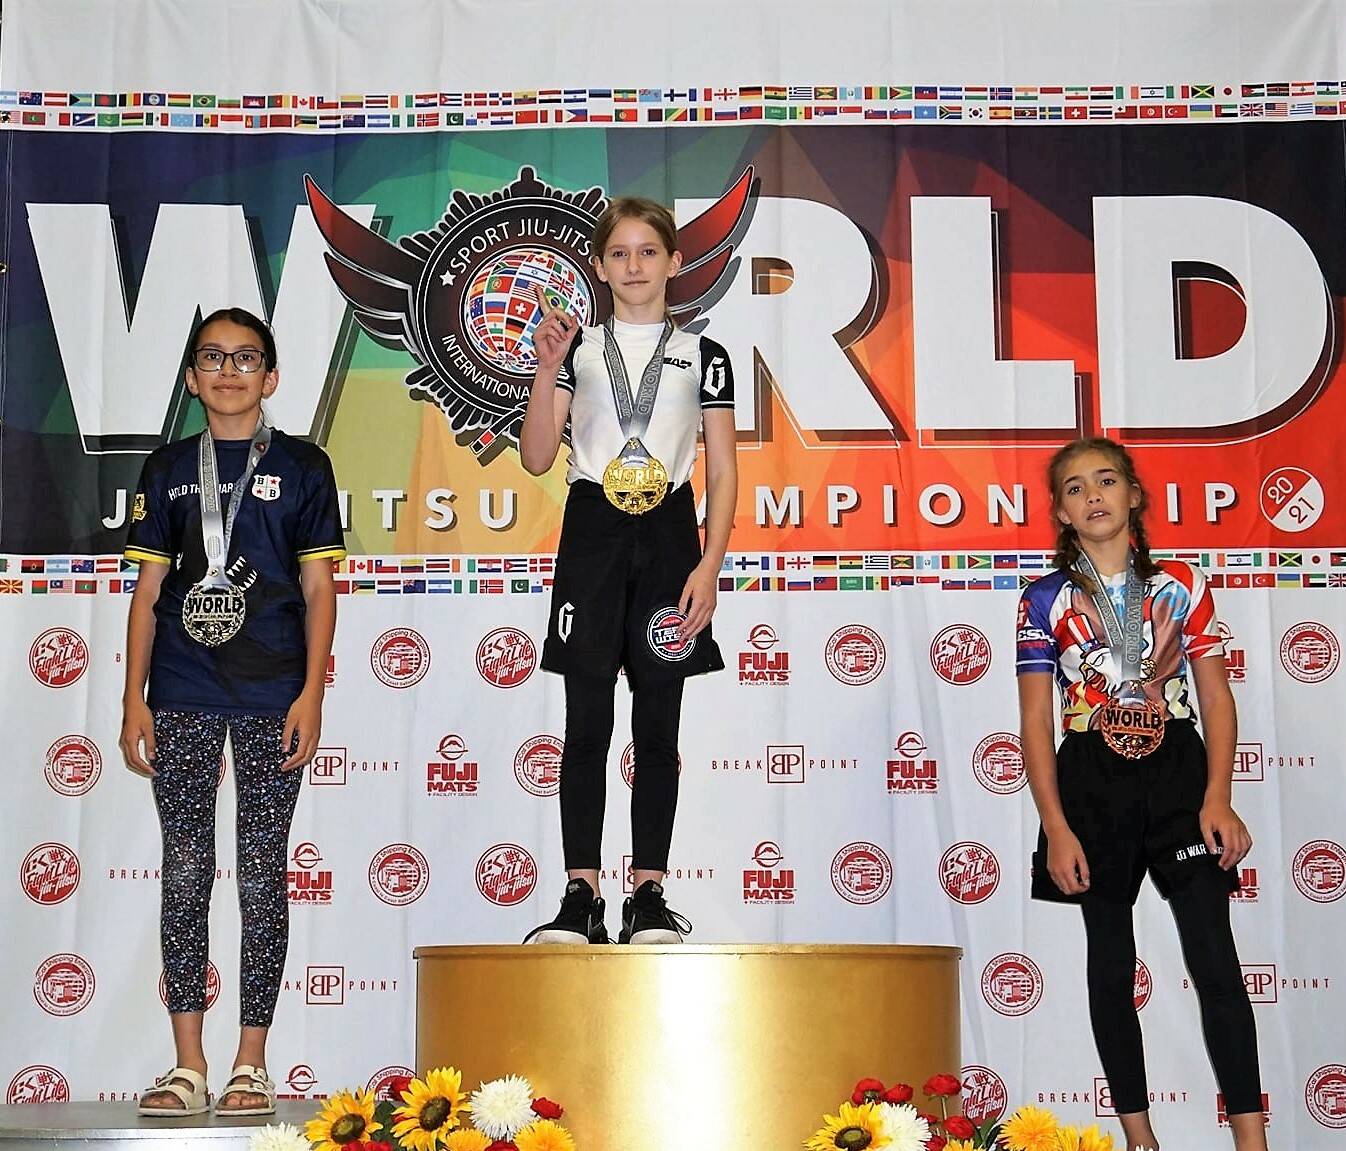 Maggie Gibson, center, stands atop the victory podium at the Sport Jiu Jitsu International Federation (SJJIF) World Championships in Dallas, Texas, on Oct. 30. Photo courtesy of the SJJIF